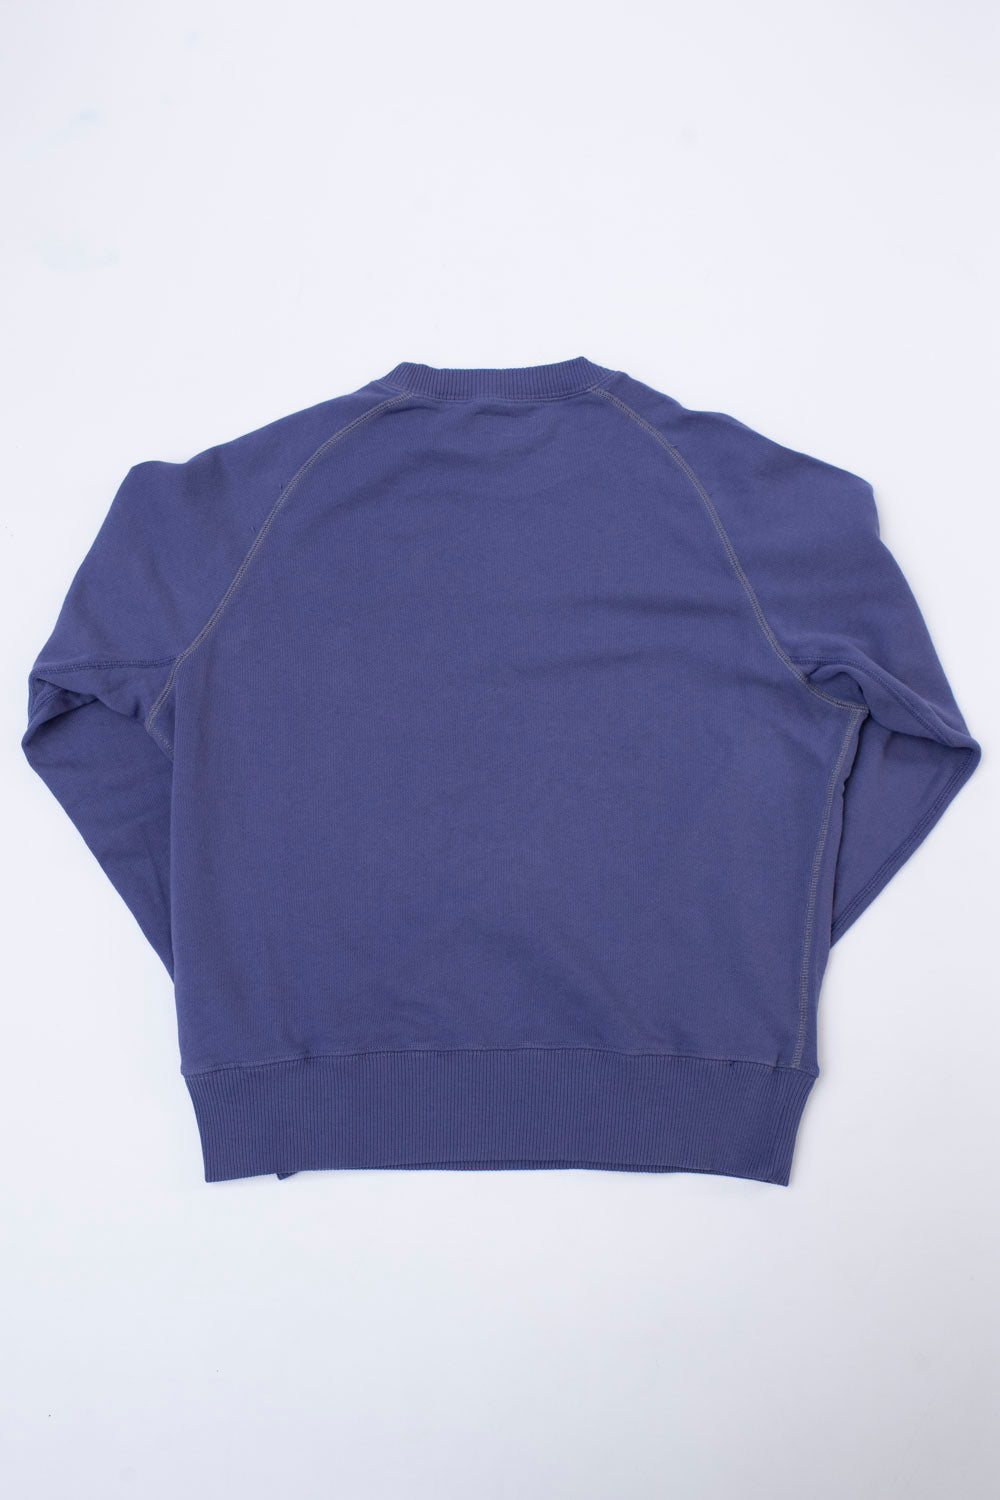 RGSW01.504 - 10.6oz Organic - Dant Blu Fit | Sweatshirt Relaxed Cotton Purple James